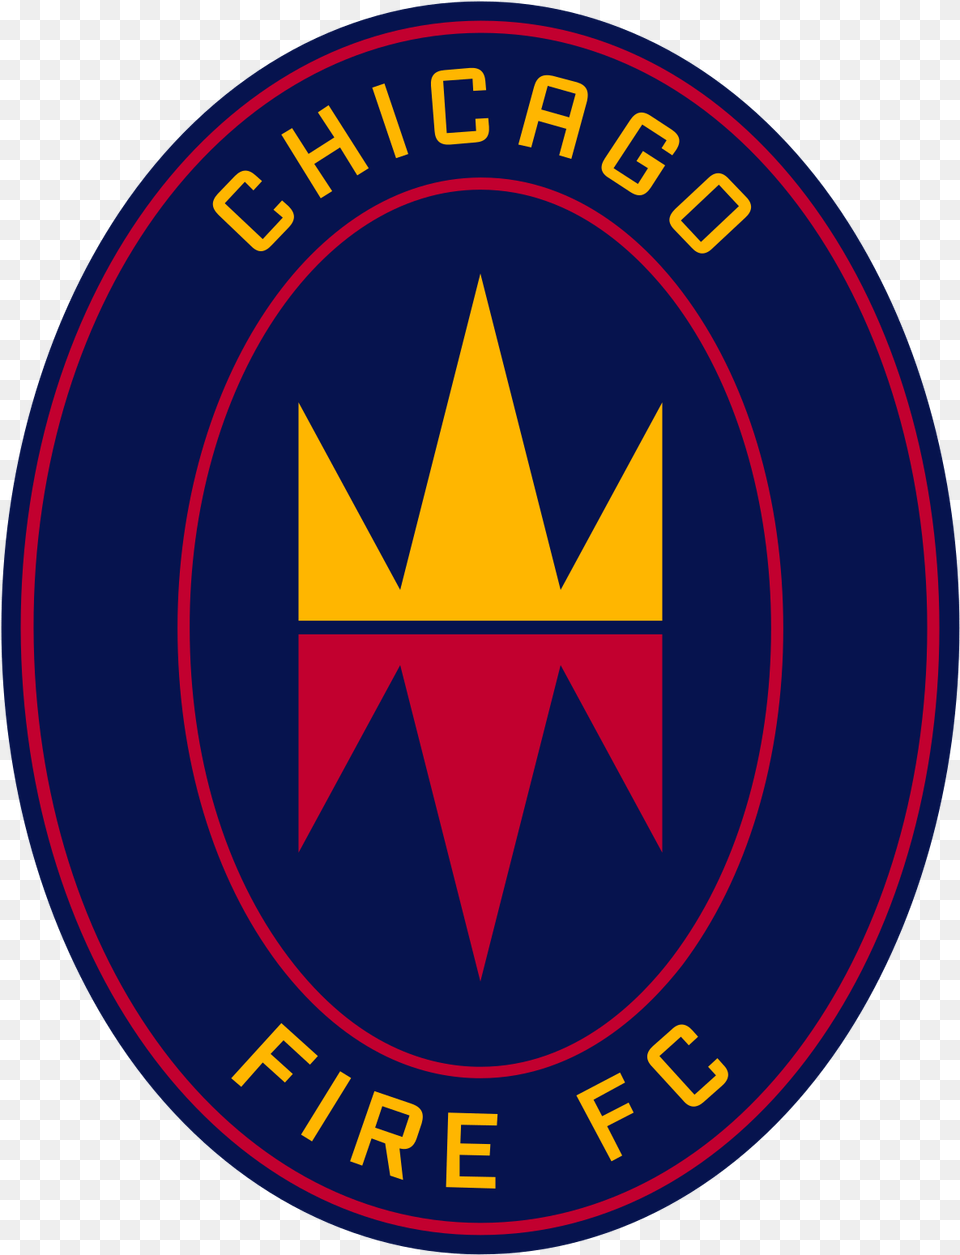 Chicago Fire Fc Wikipedia Cocolo Bland, Logo, Emblem, Symbol, Badge Png Image